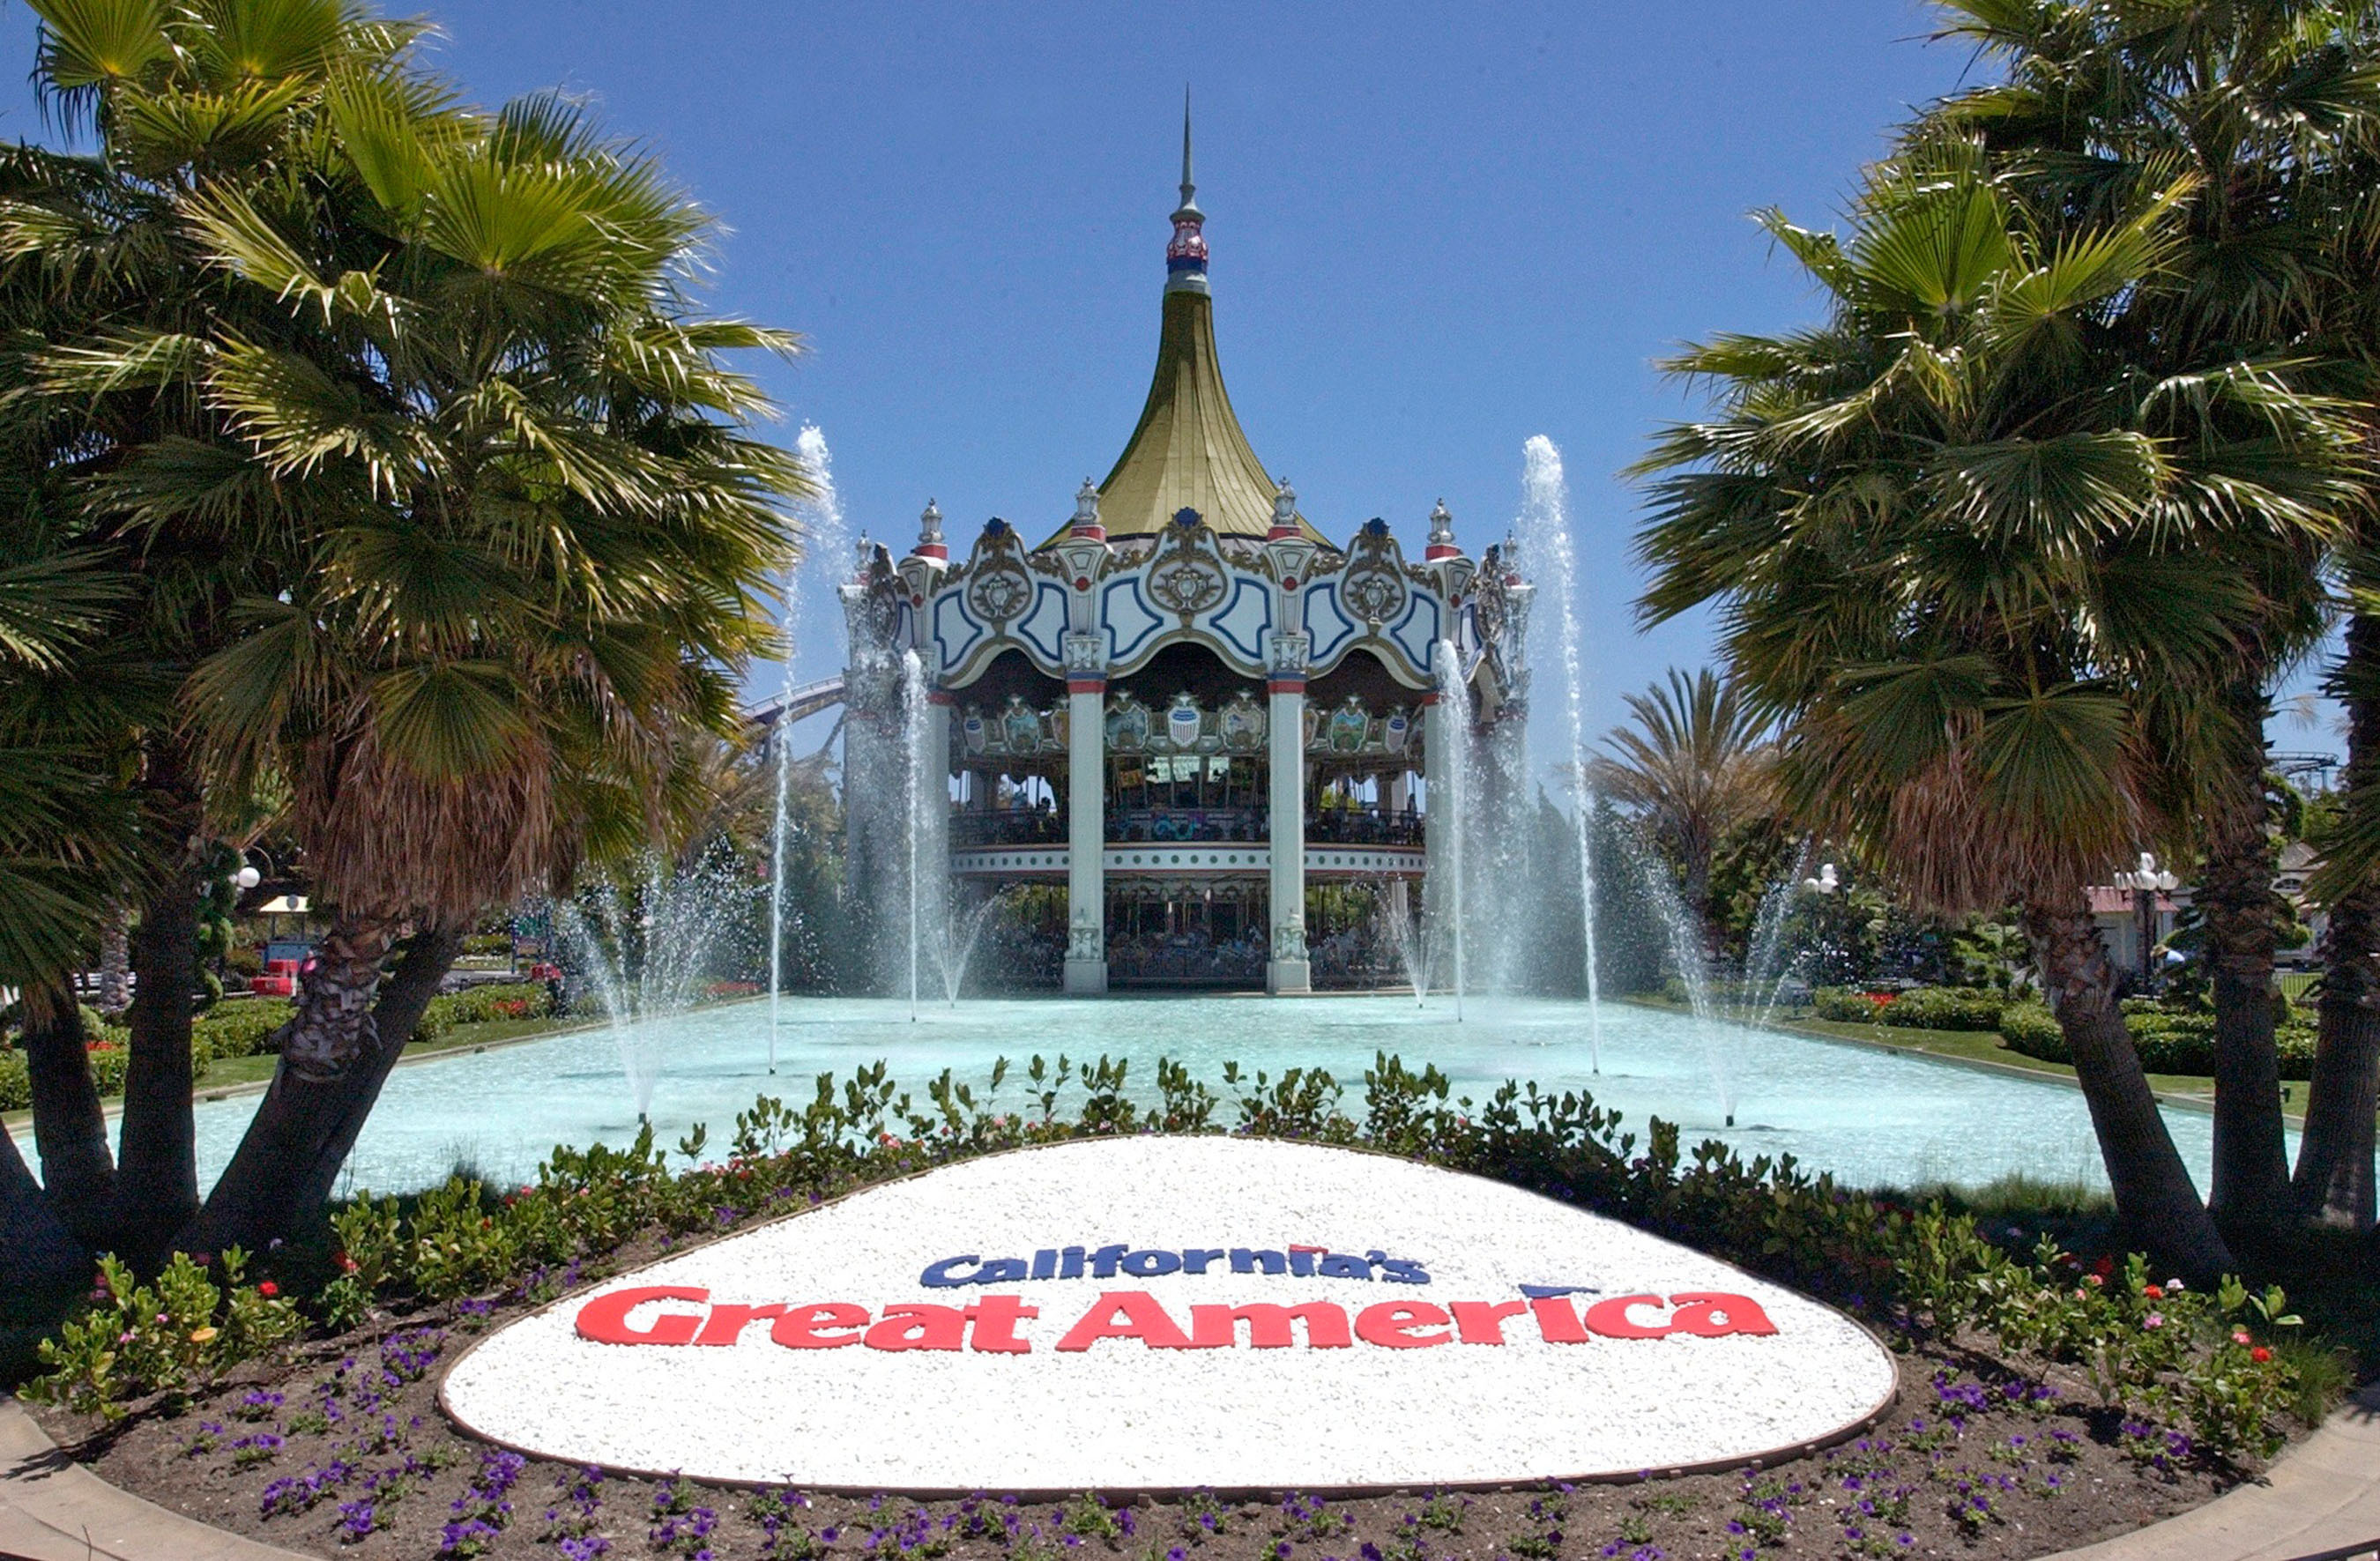 California's Great America theme park in Santa Clara, California. (PRNewsFoto/Santa Clara Convention and Visitors Bureau)